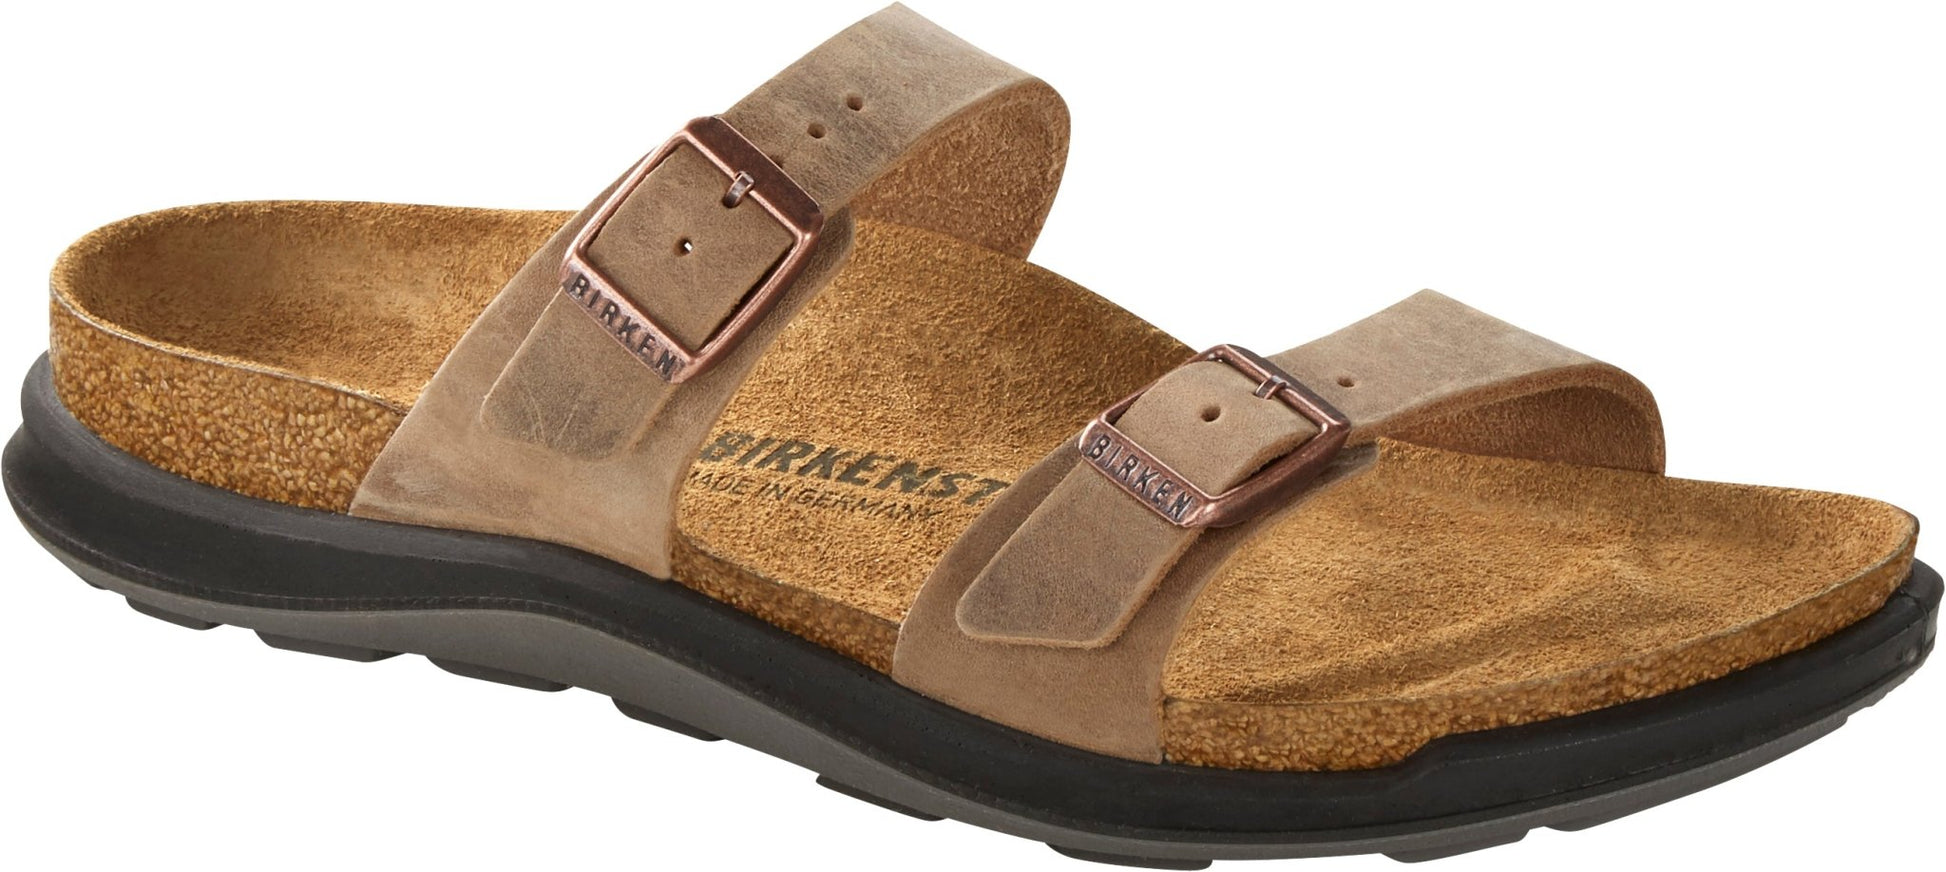 Birkenstock Sierra Tobacco Oiled Leather Original Footbed - Grady’s Feet Essentials - Birkenstock